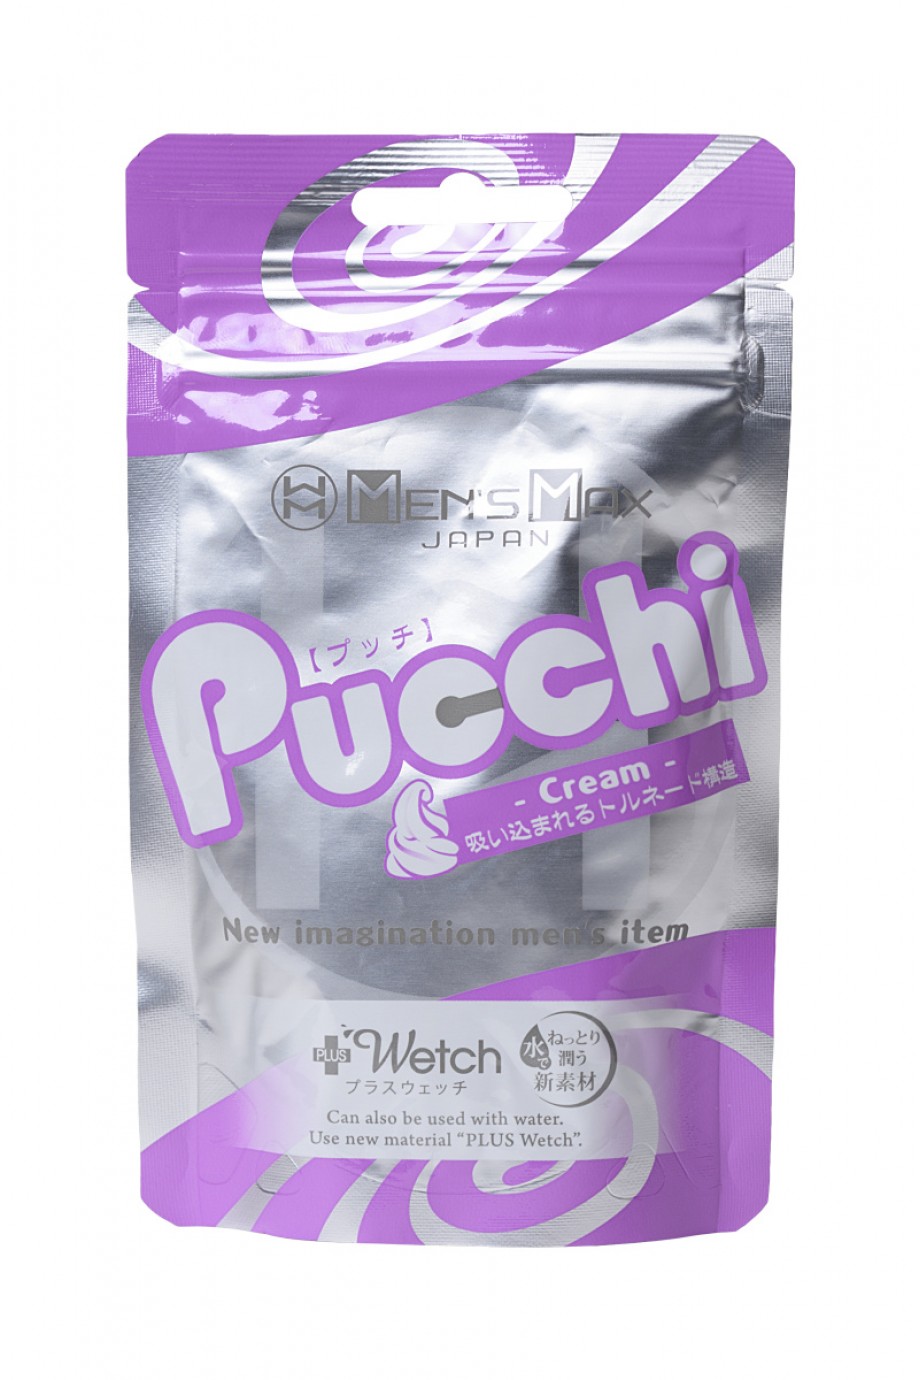 MensMax Pucchi Cream